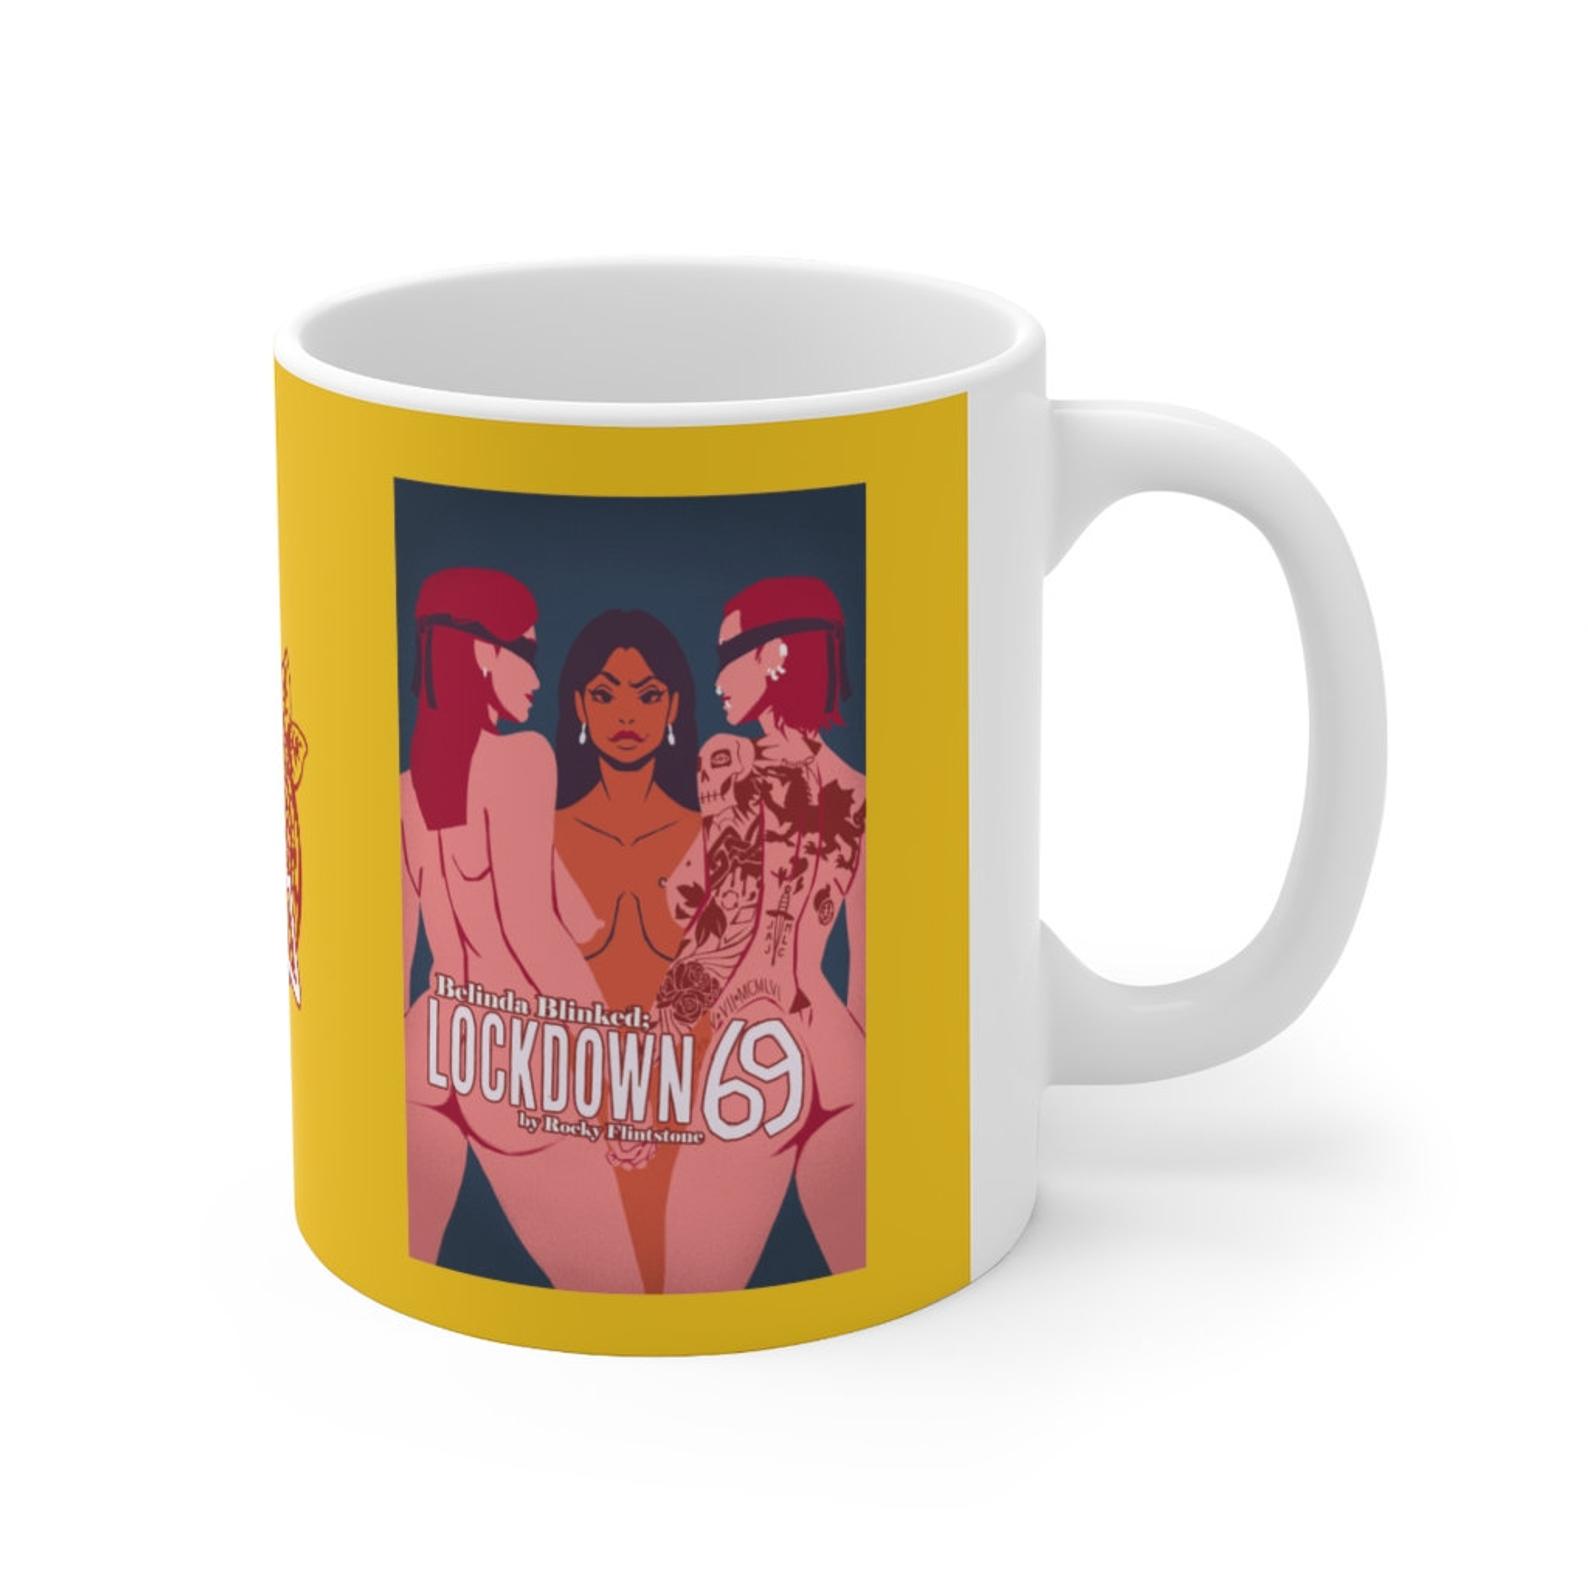 Rocky Flintstone Lockdown 69 bookcover mug at Etsy